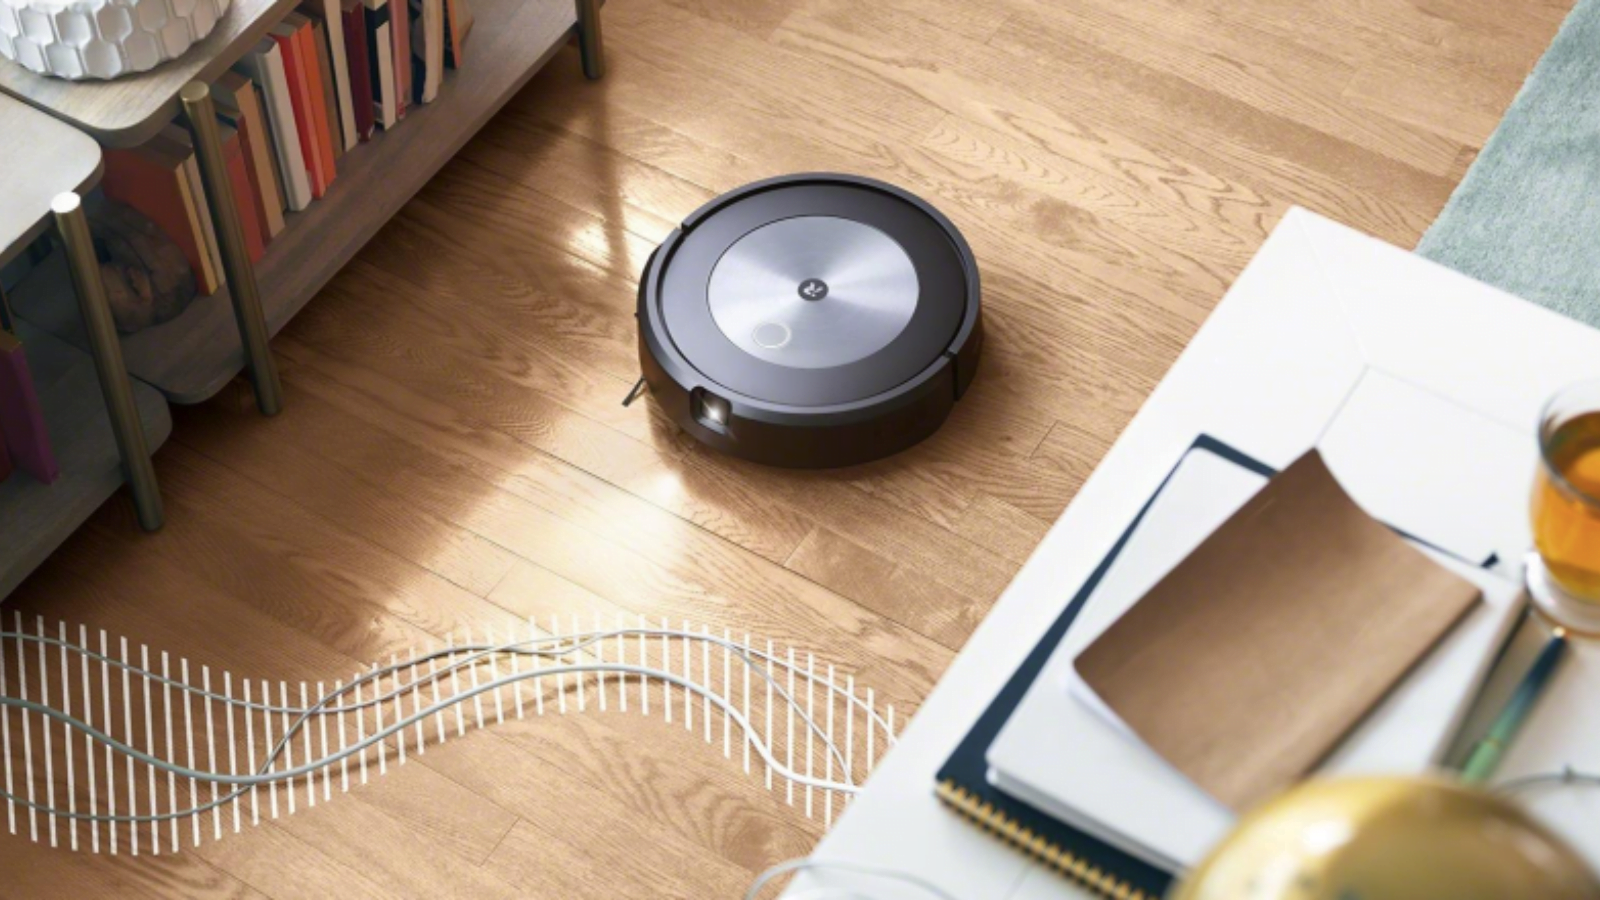 iRobot's Roomba